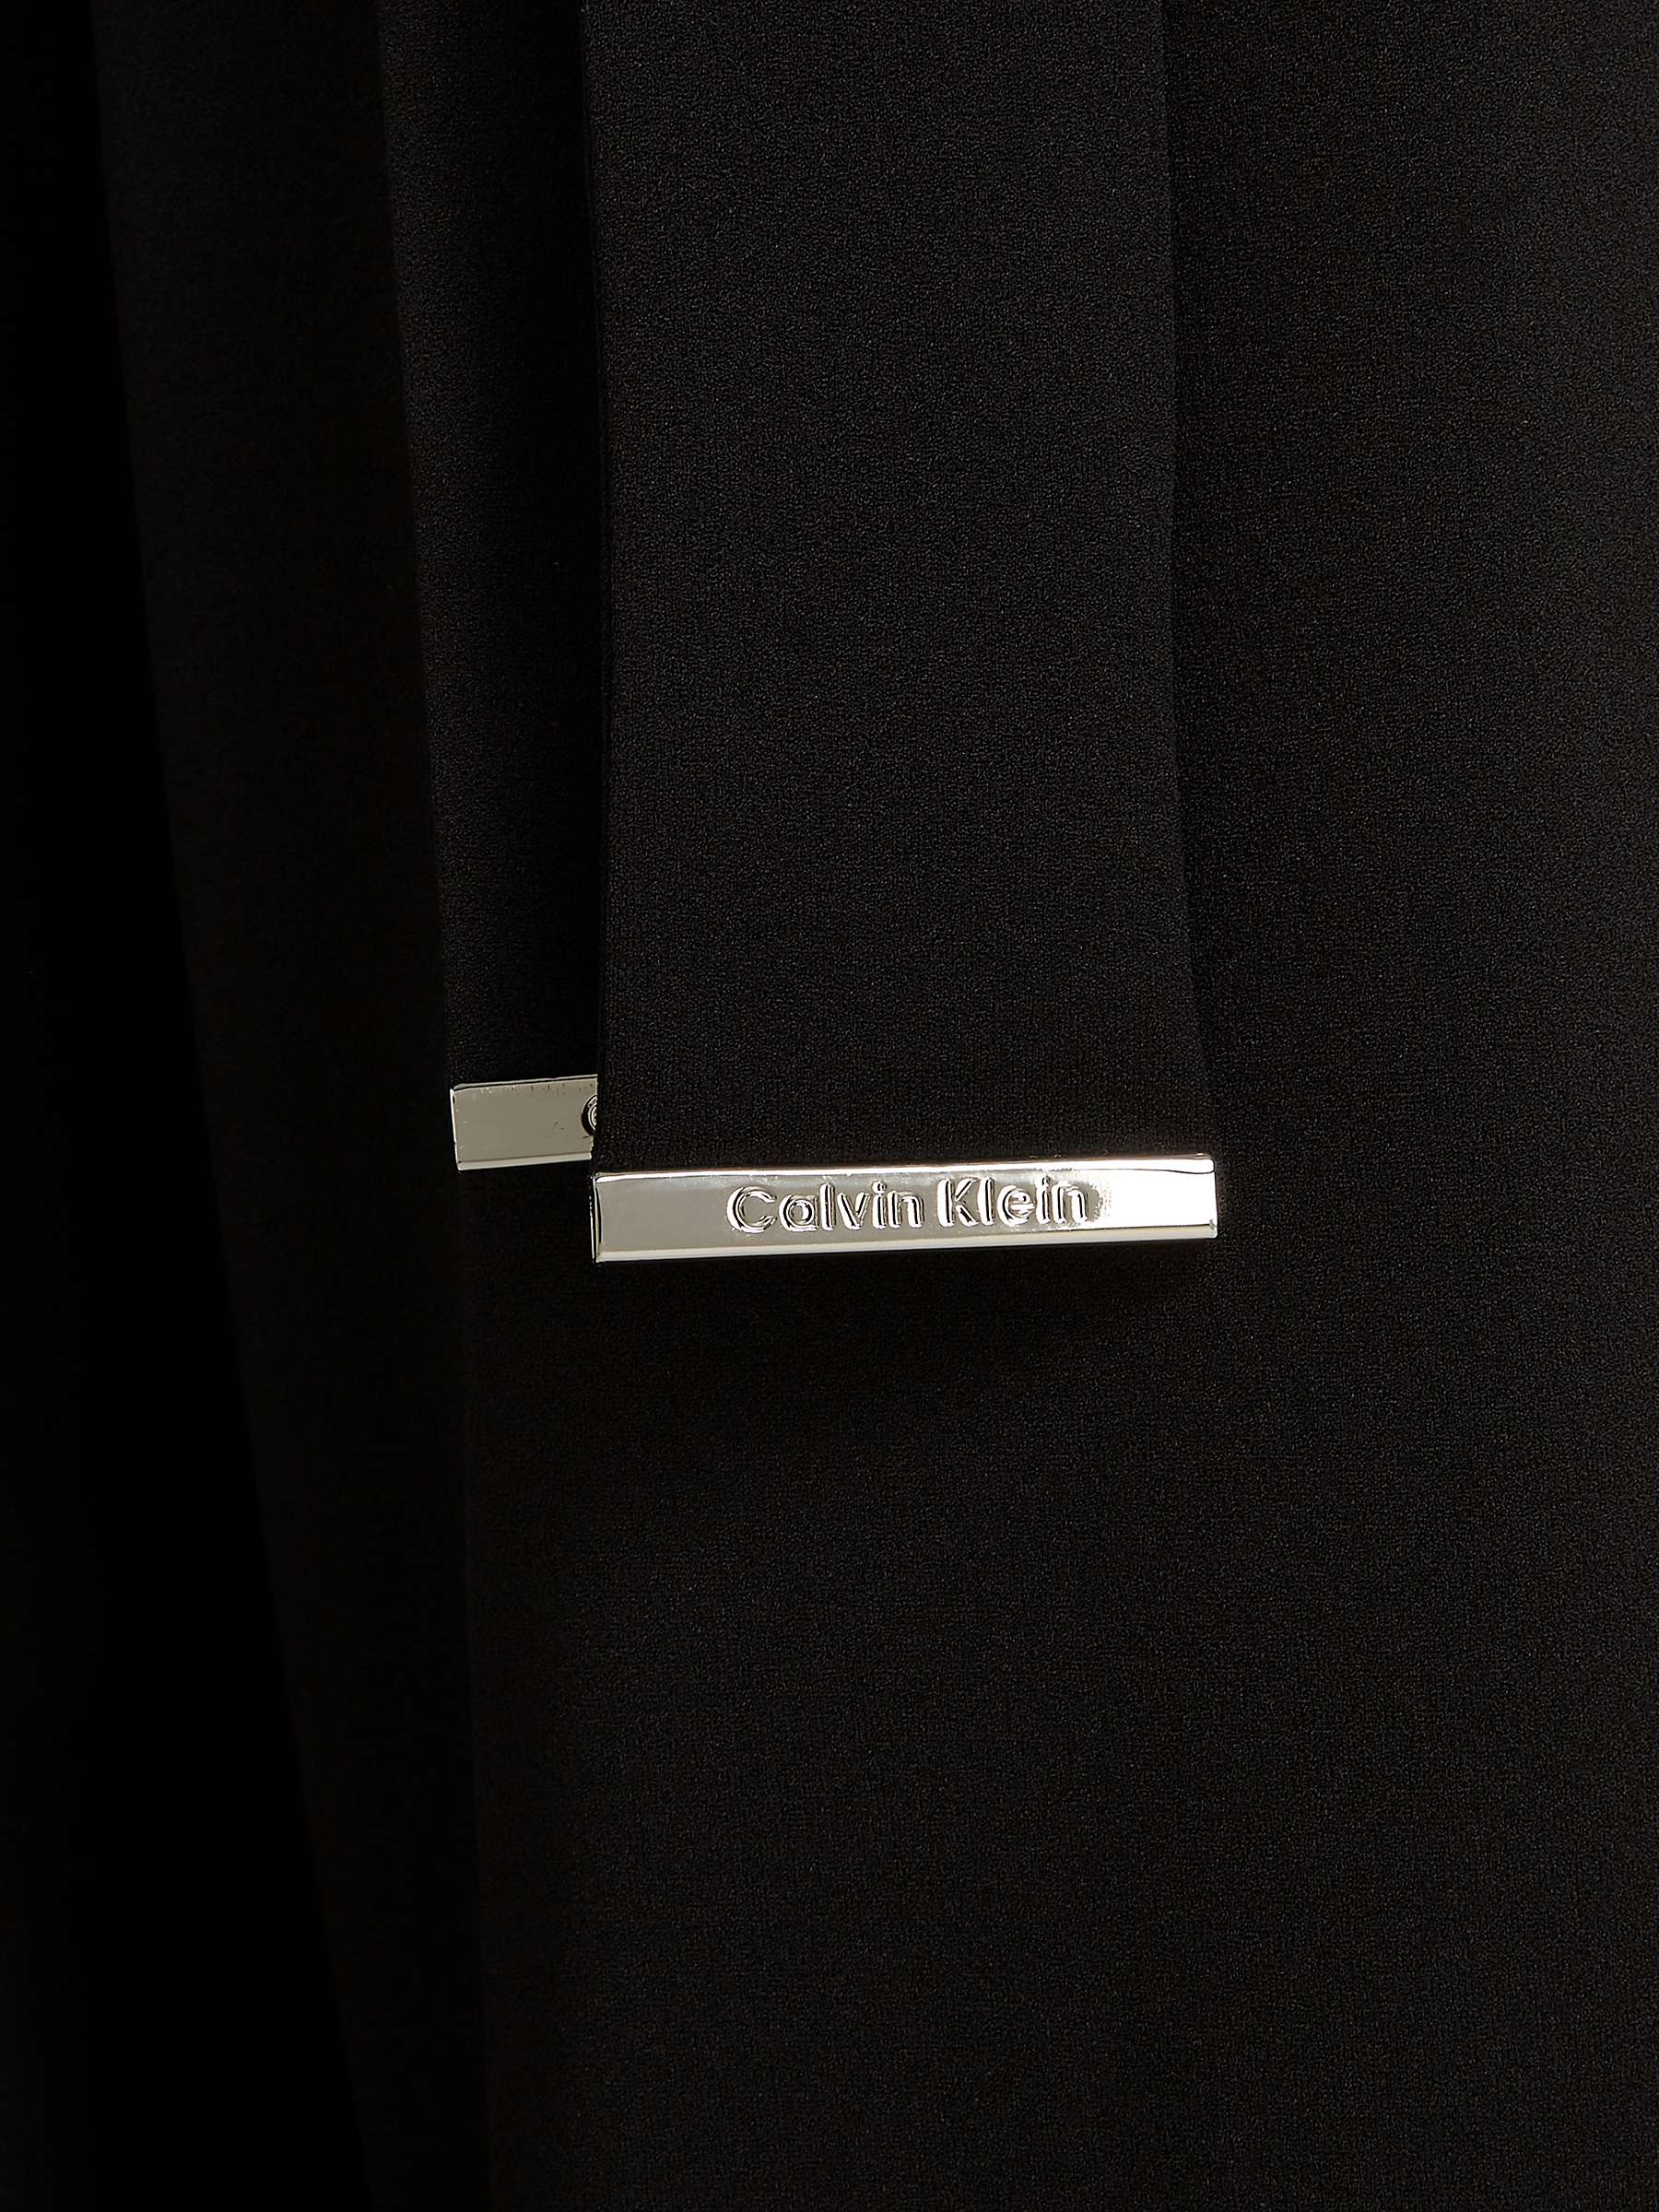 Buy Calvin Klein Cutout Back Crepe Jumpsuit, Black Online at johnlewis.com